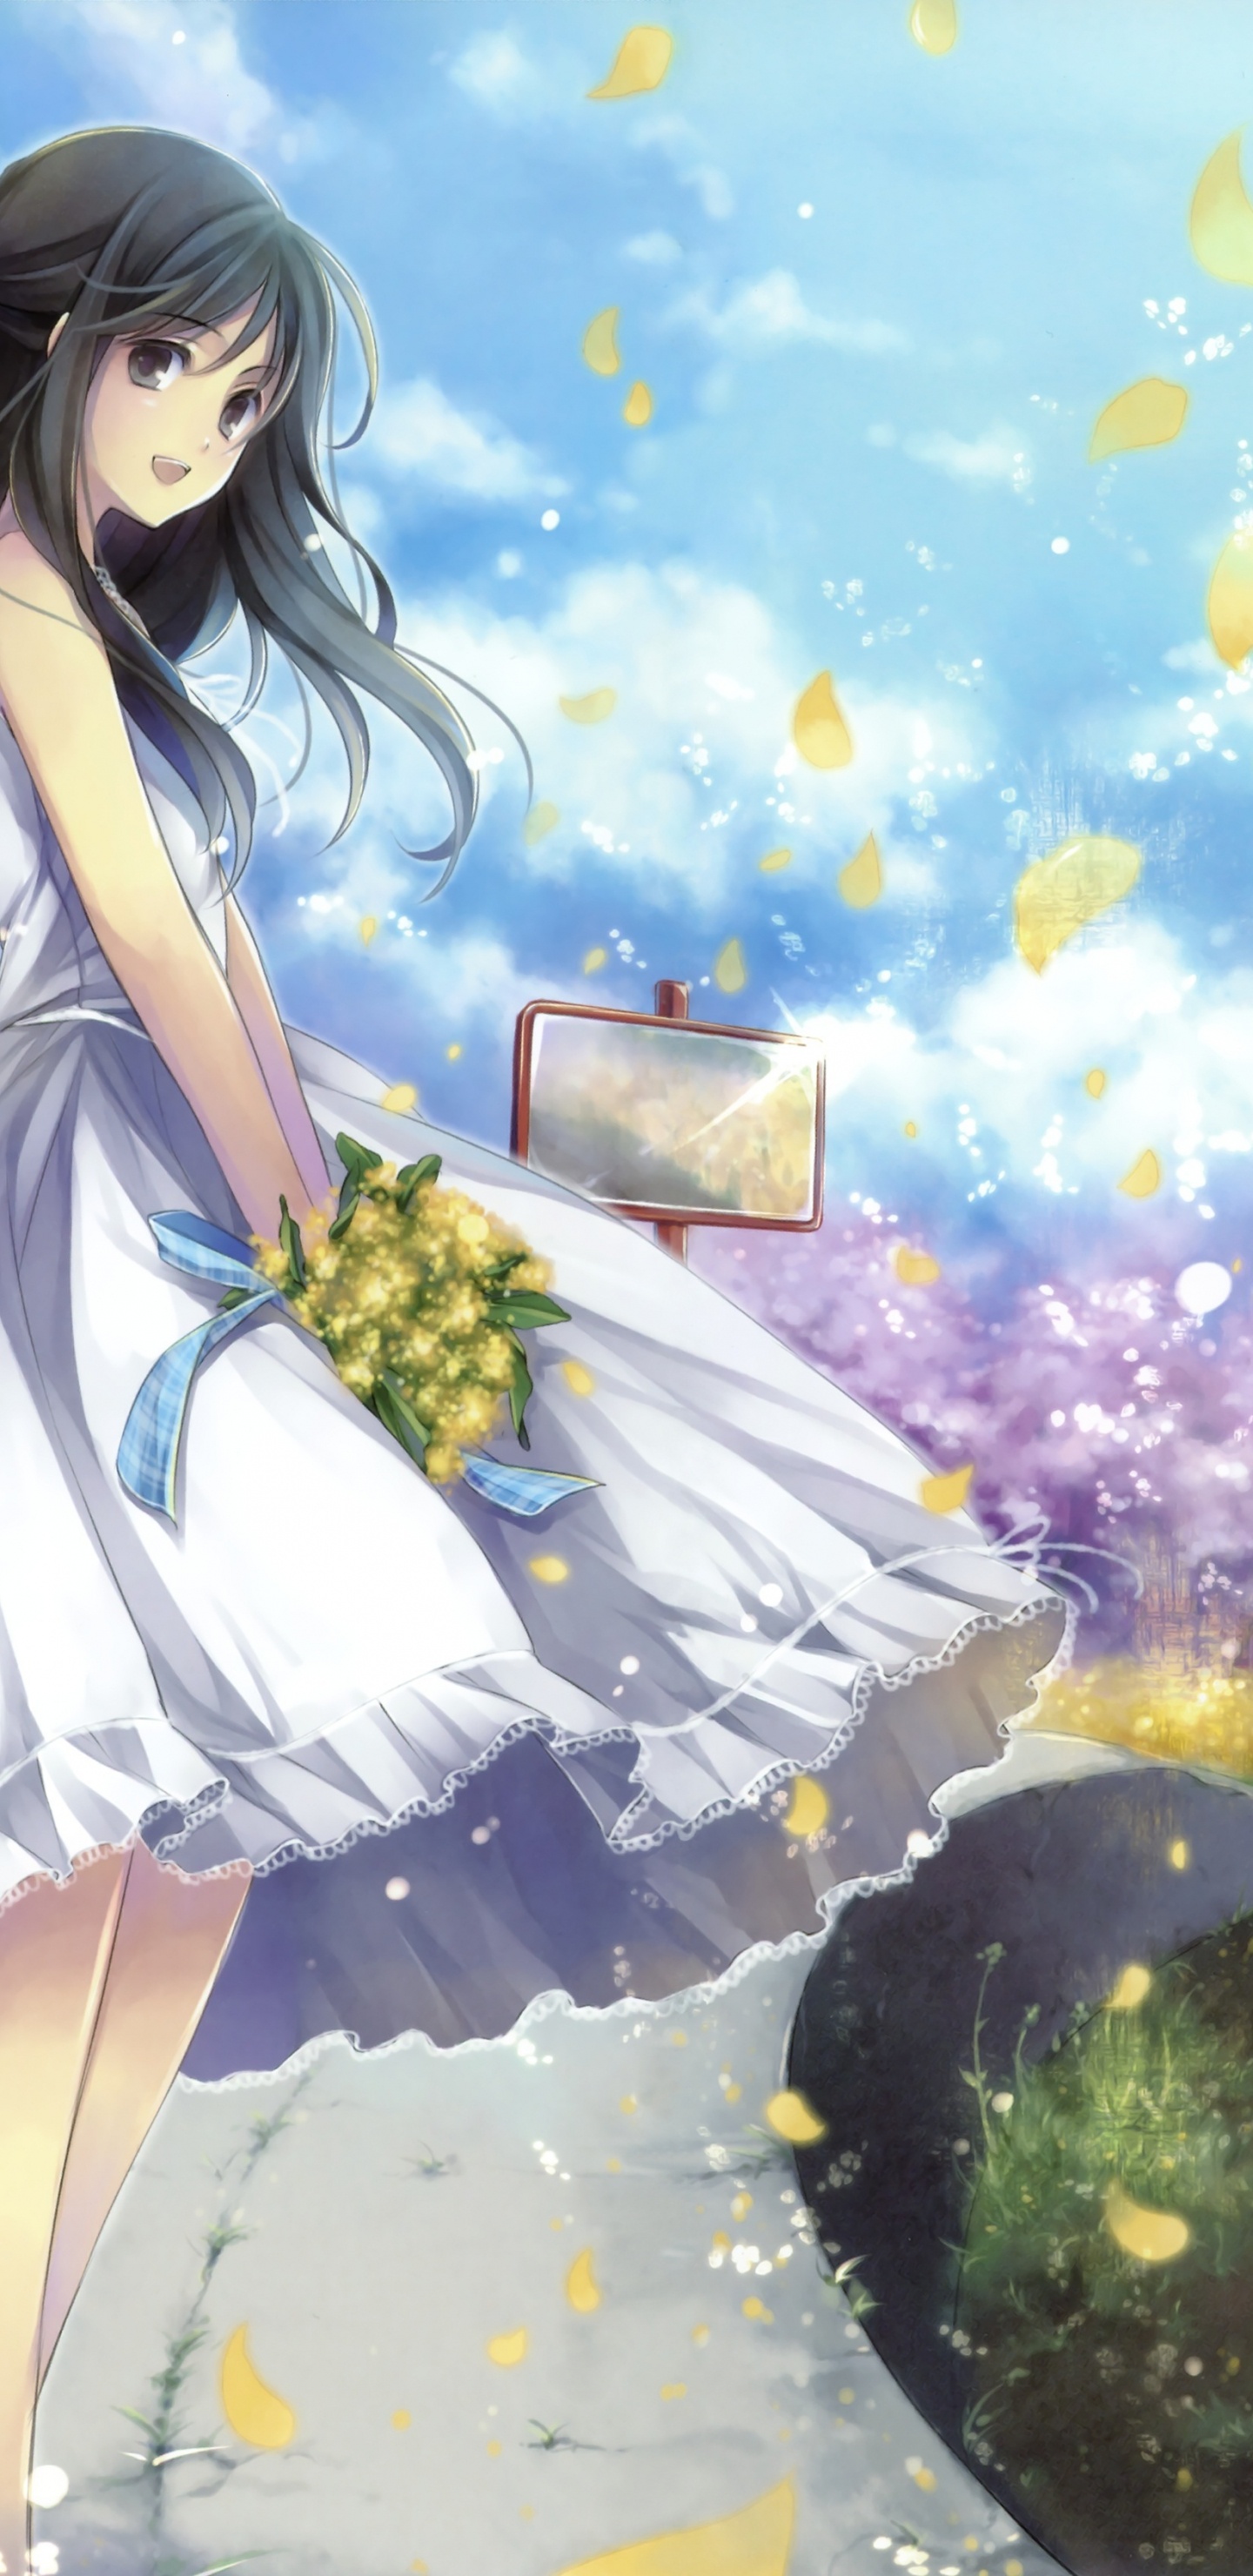 Anime Girl Summer Dress, Anime, Dress, Clothing, Train. Wallpaper in 1440x2960 Resolution